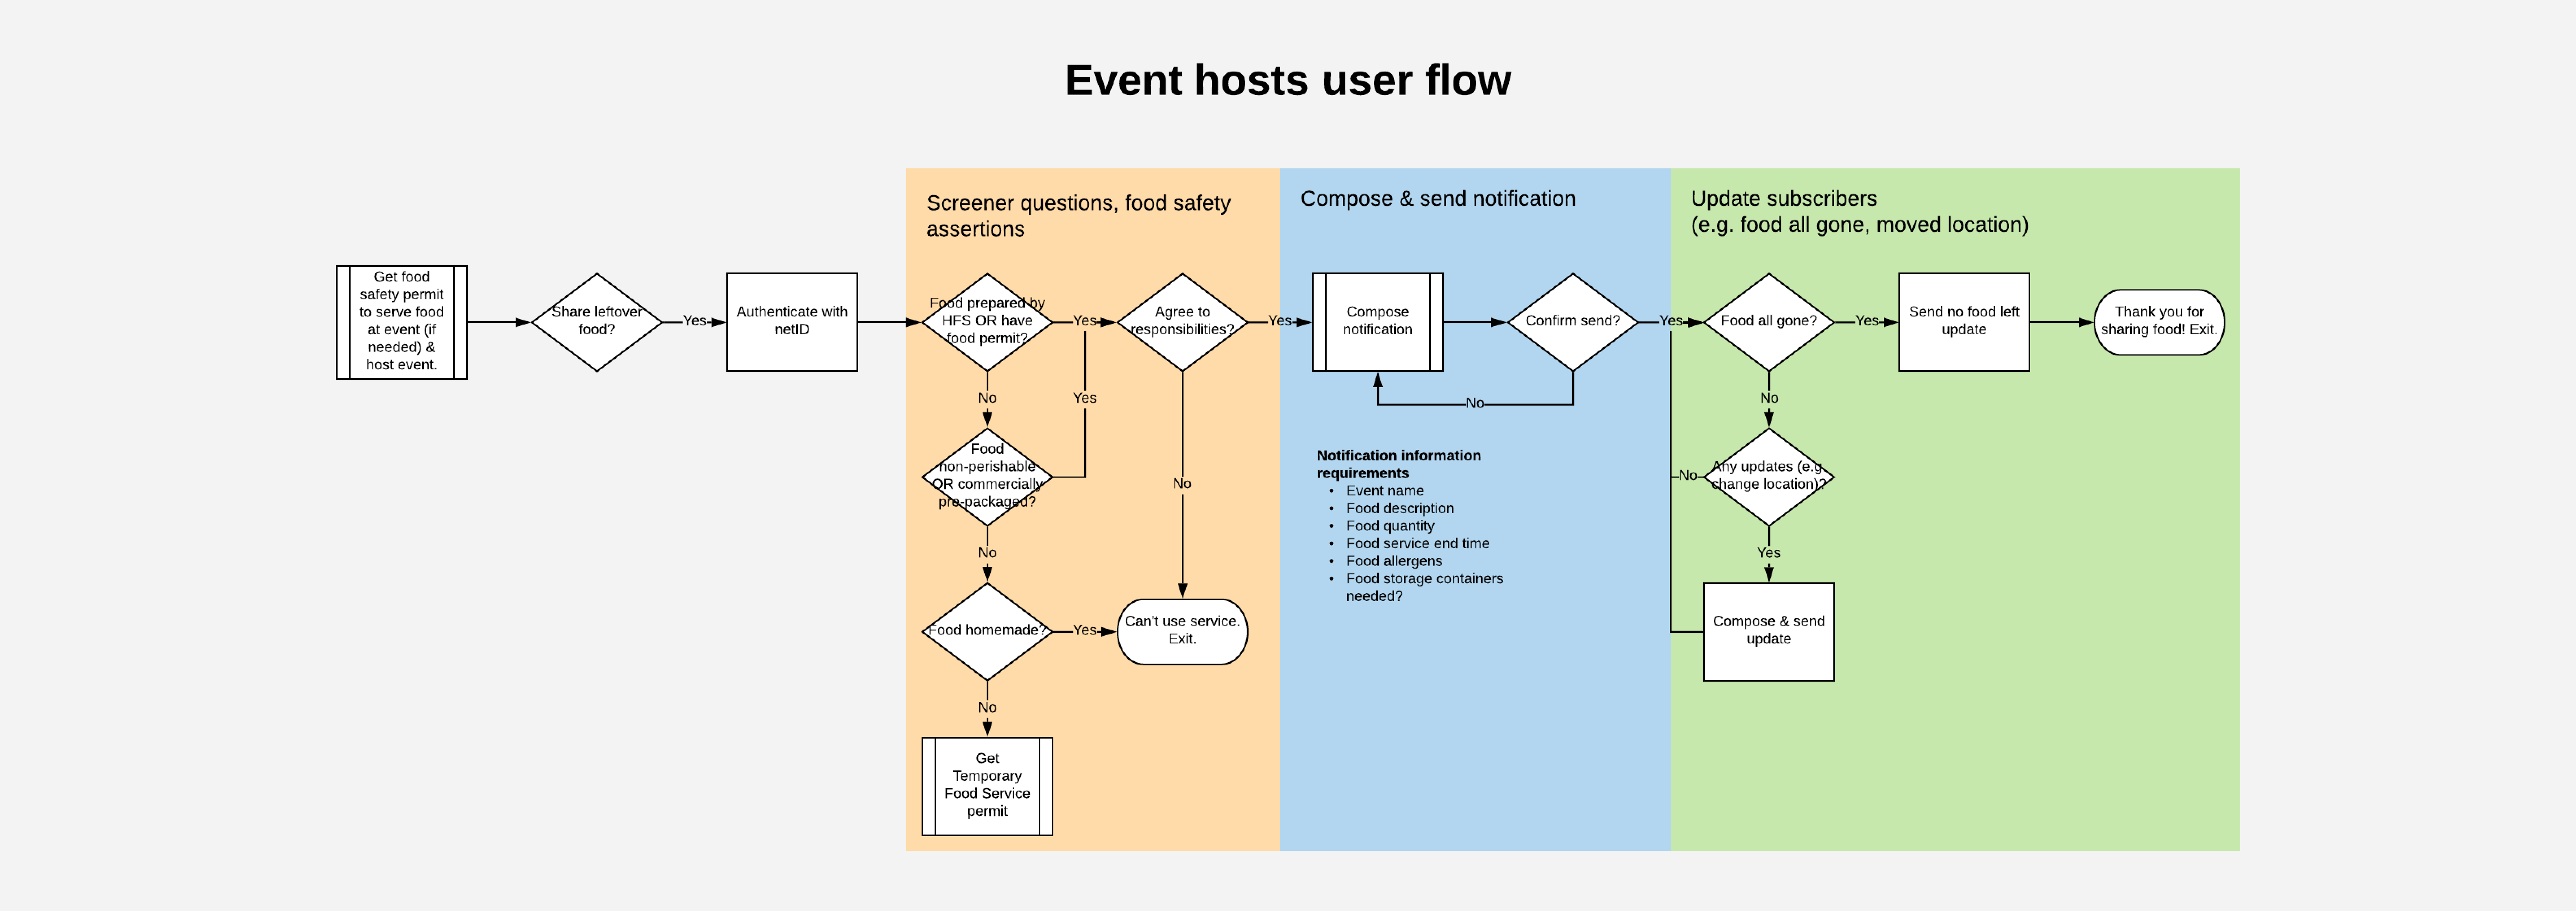 User flow diagram for event hosts.